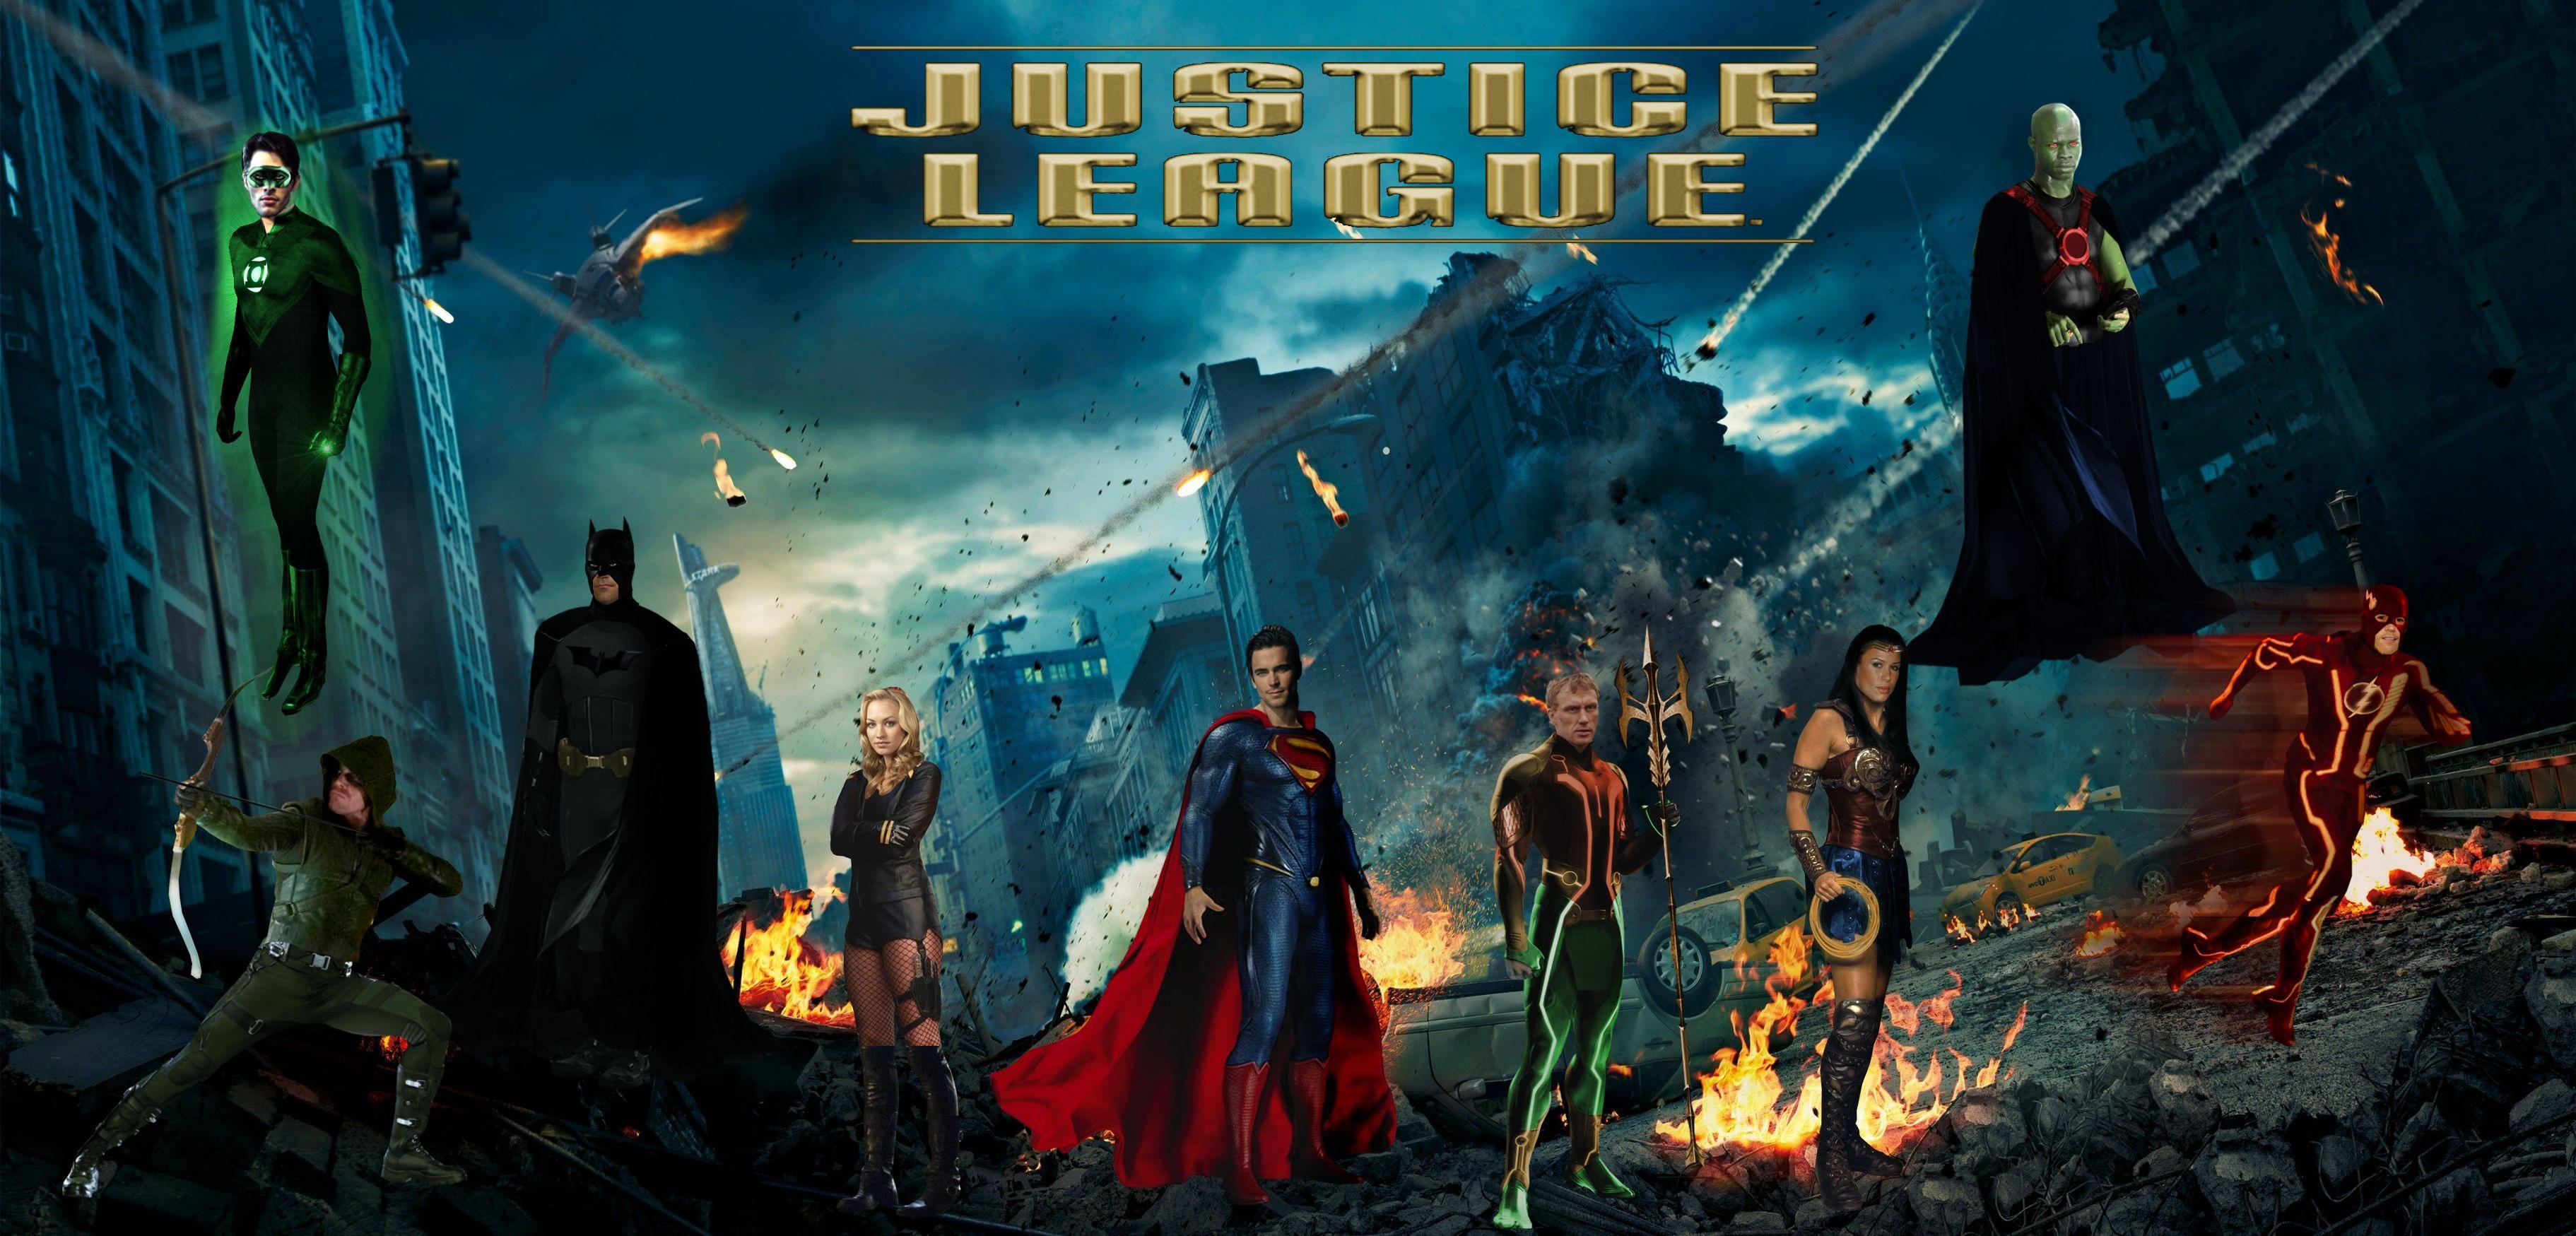 Justice League Unlimited Wallpaper